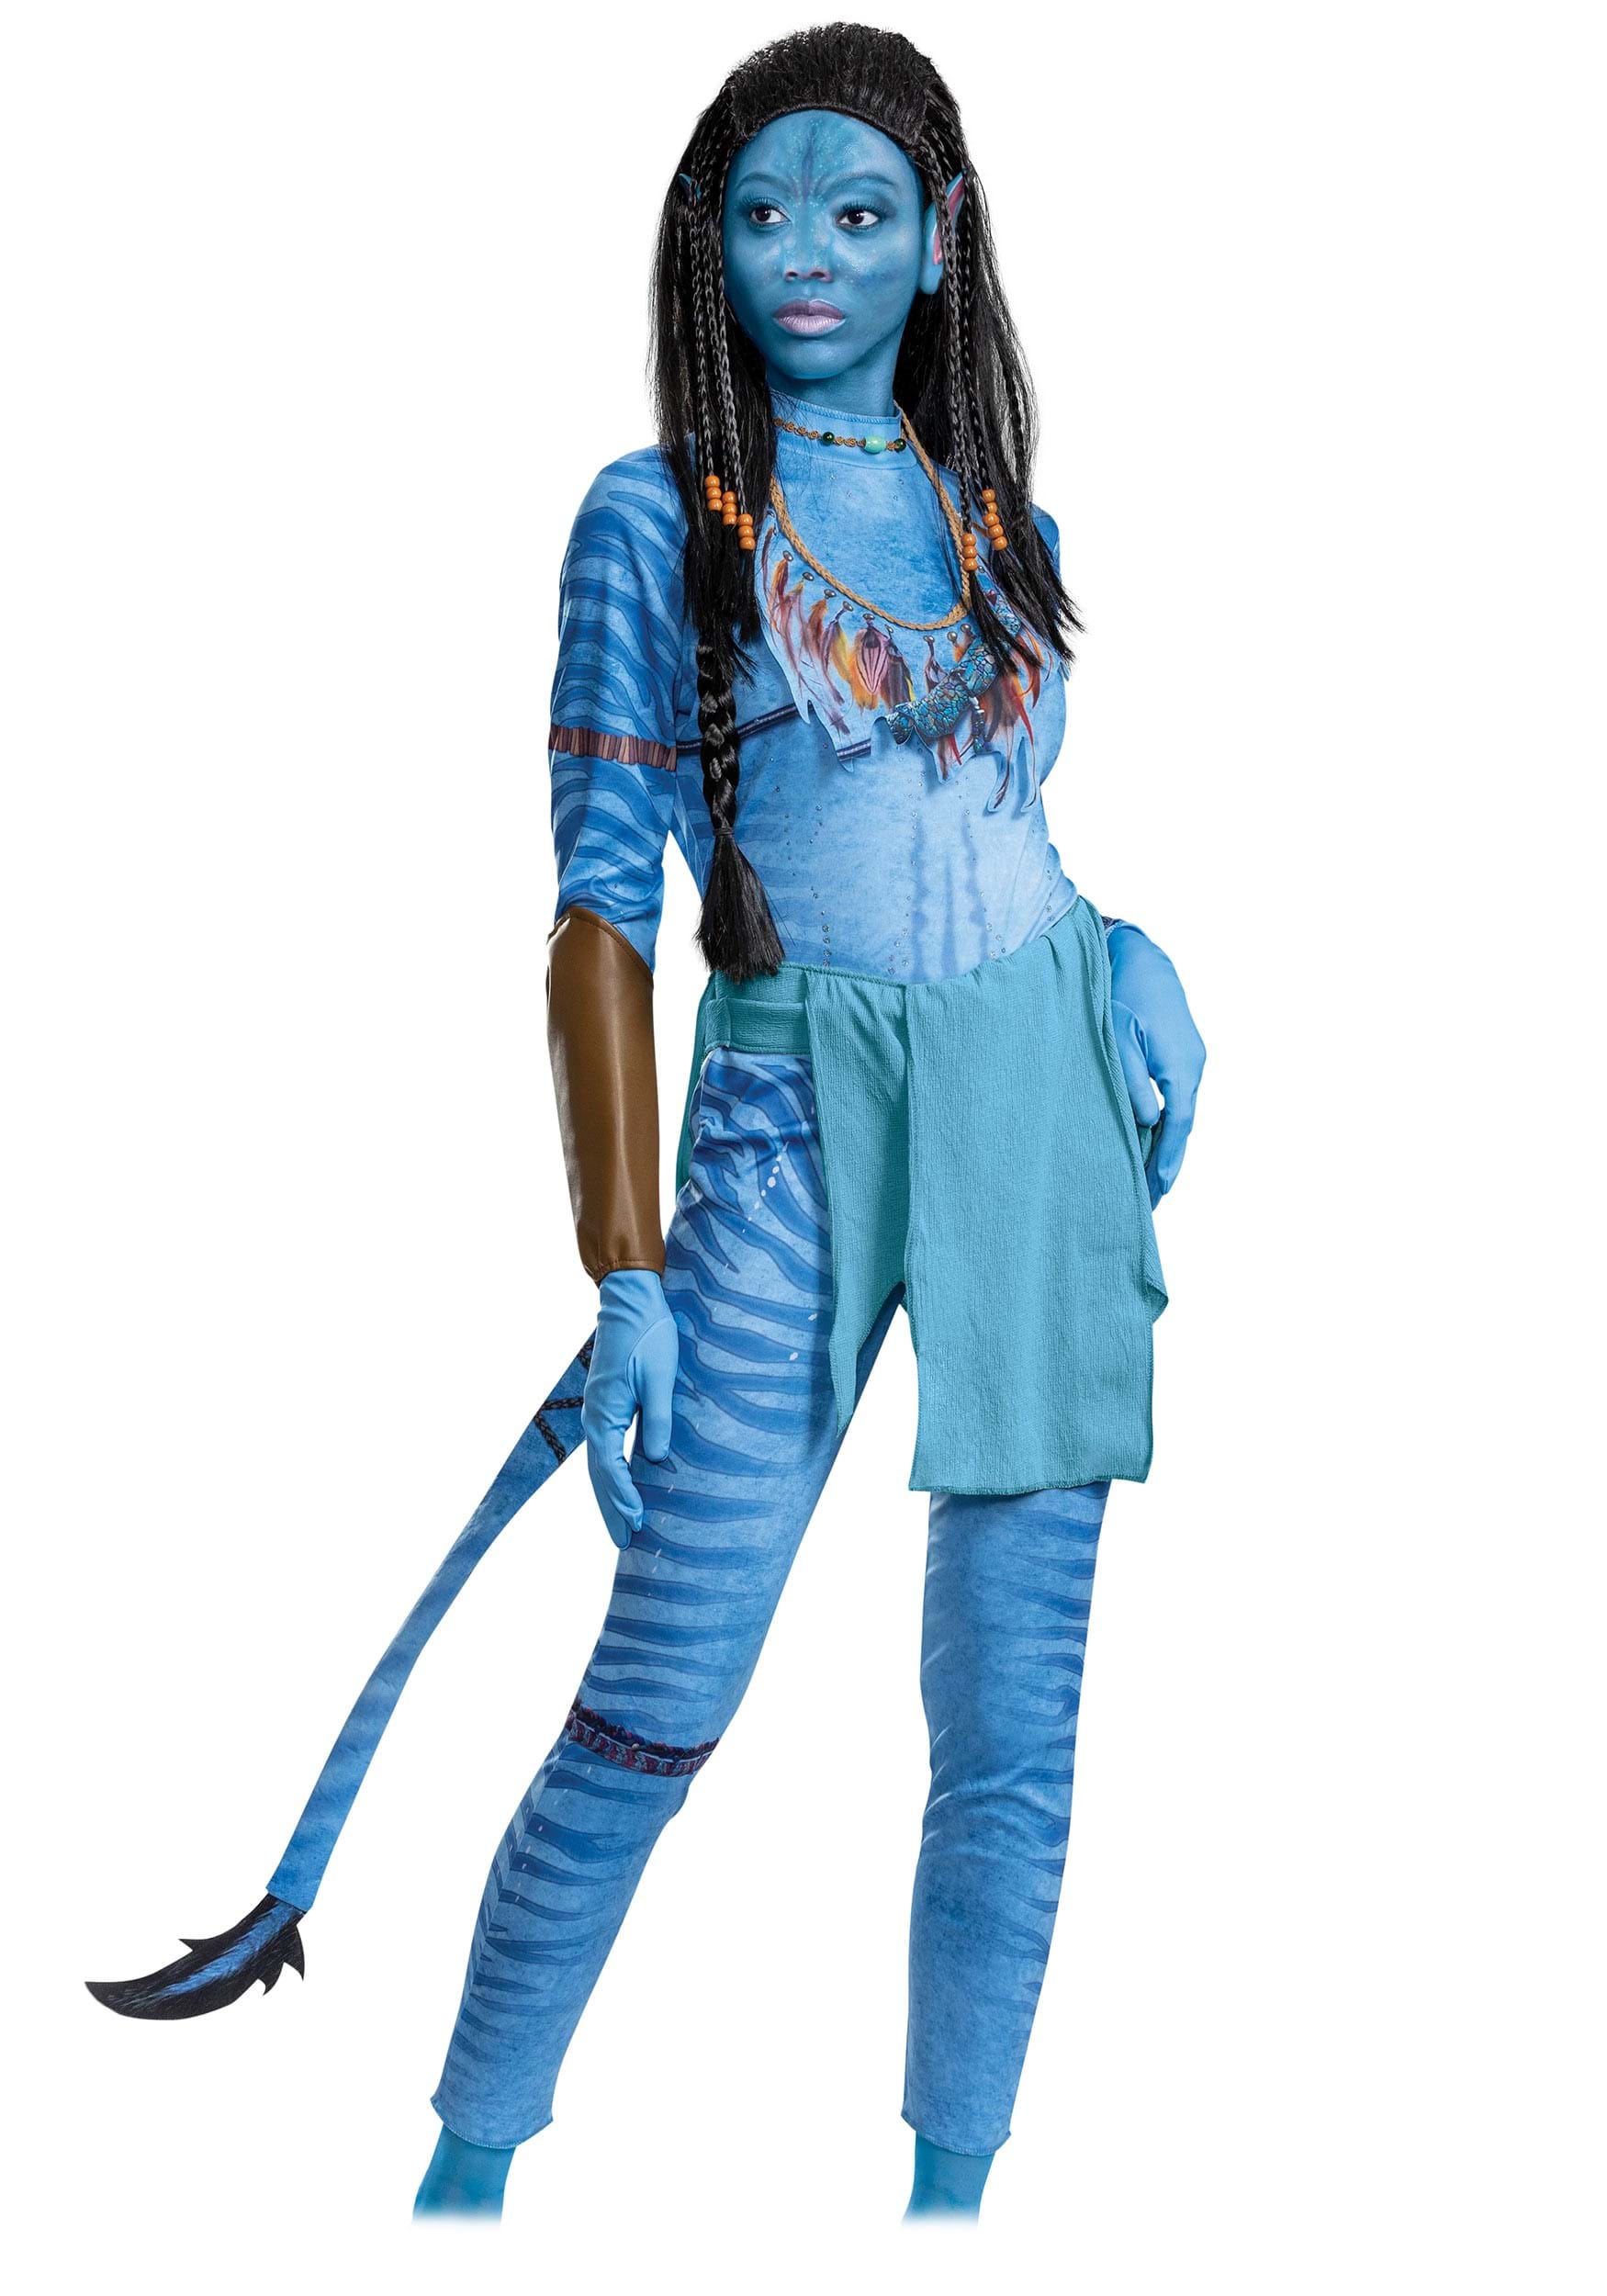 Image of Avatar Deluxe Neytiri Adult Costume ID DI129239-L